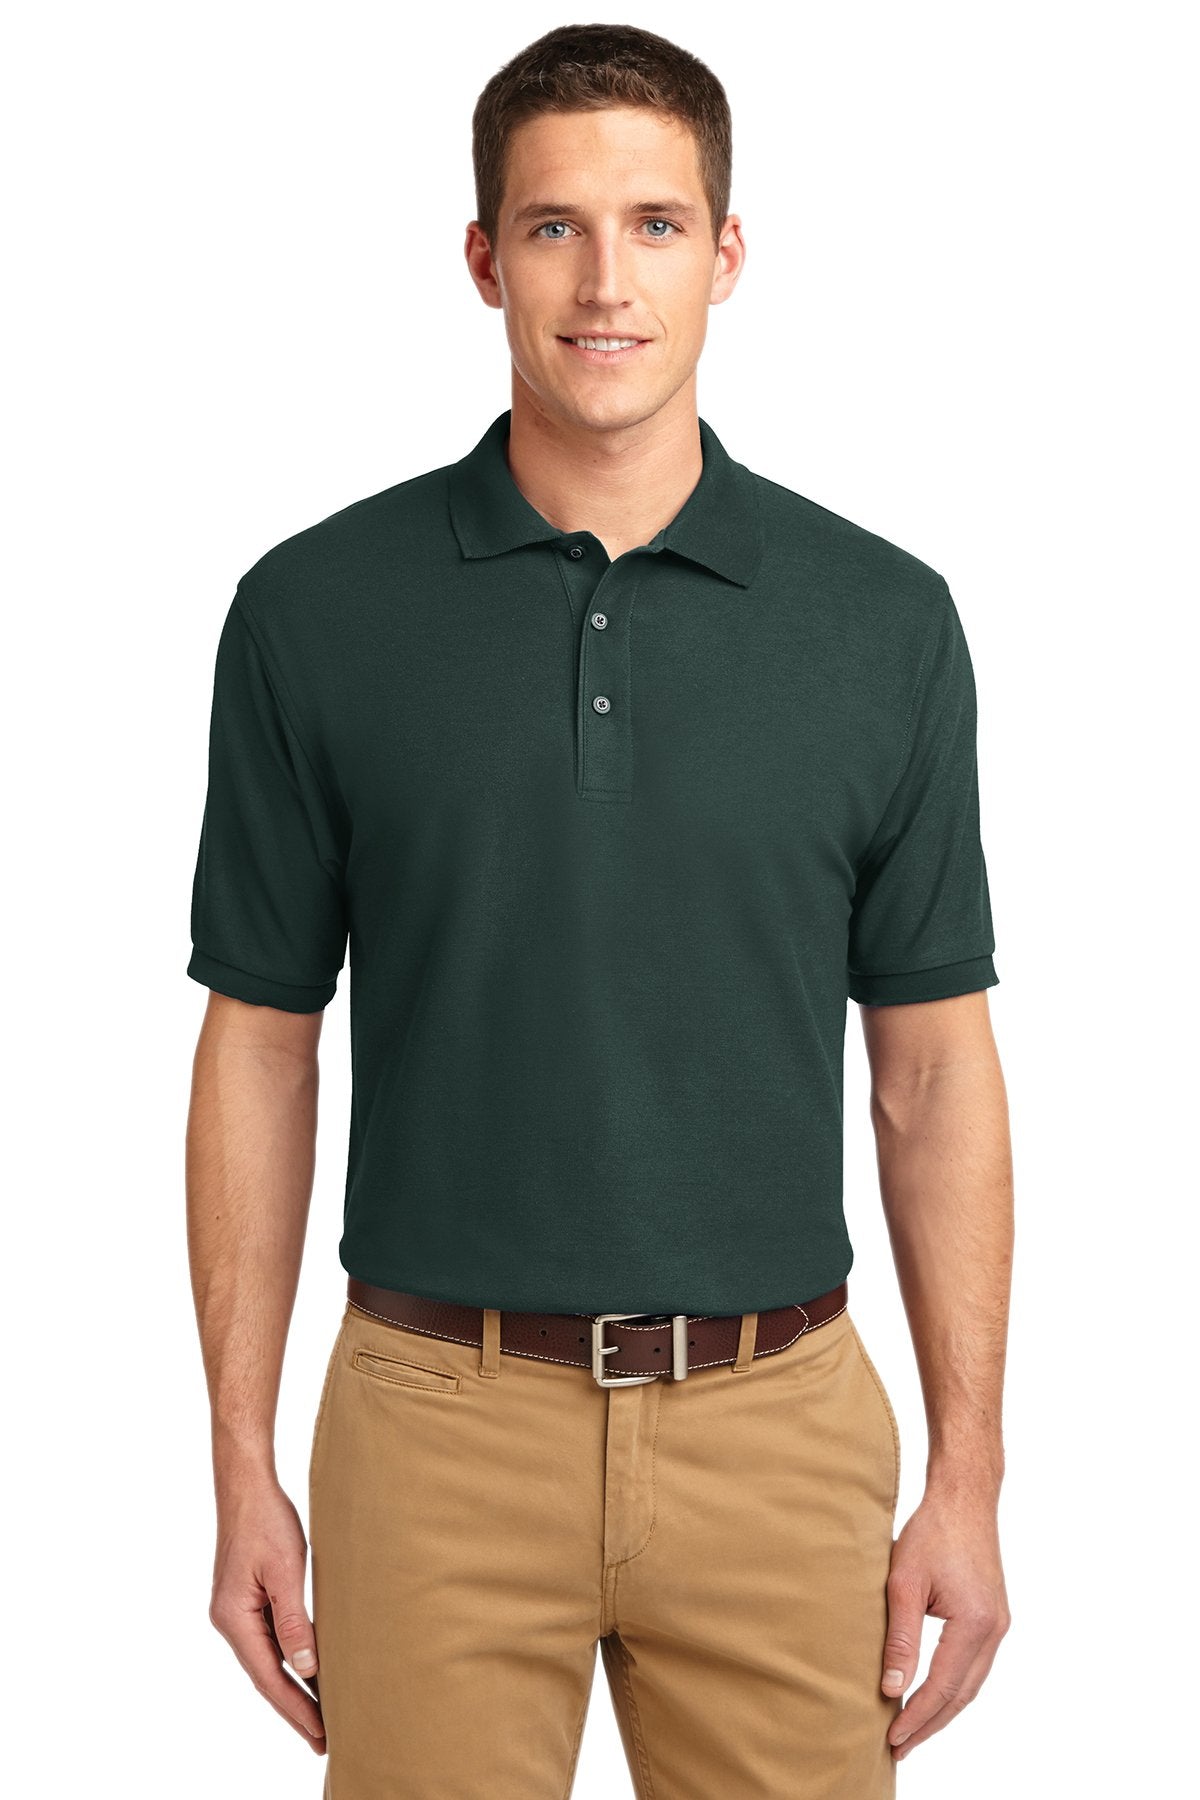 Mercy College K500 Men's Polo Shirt Dark Green 